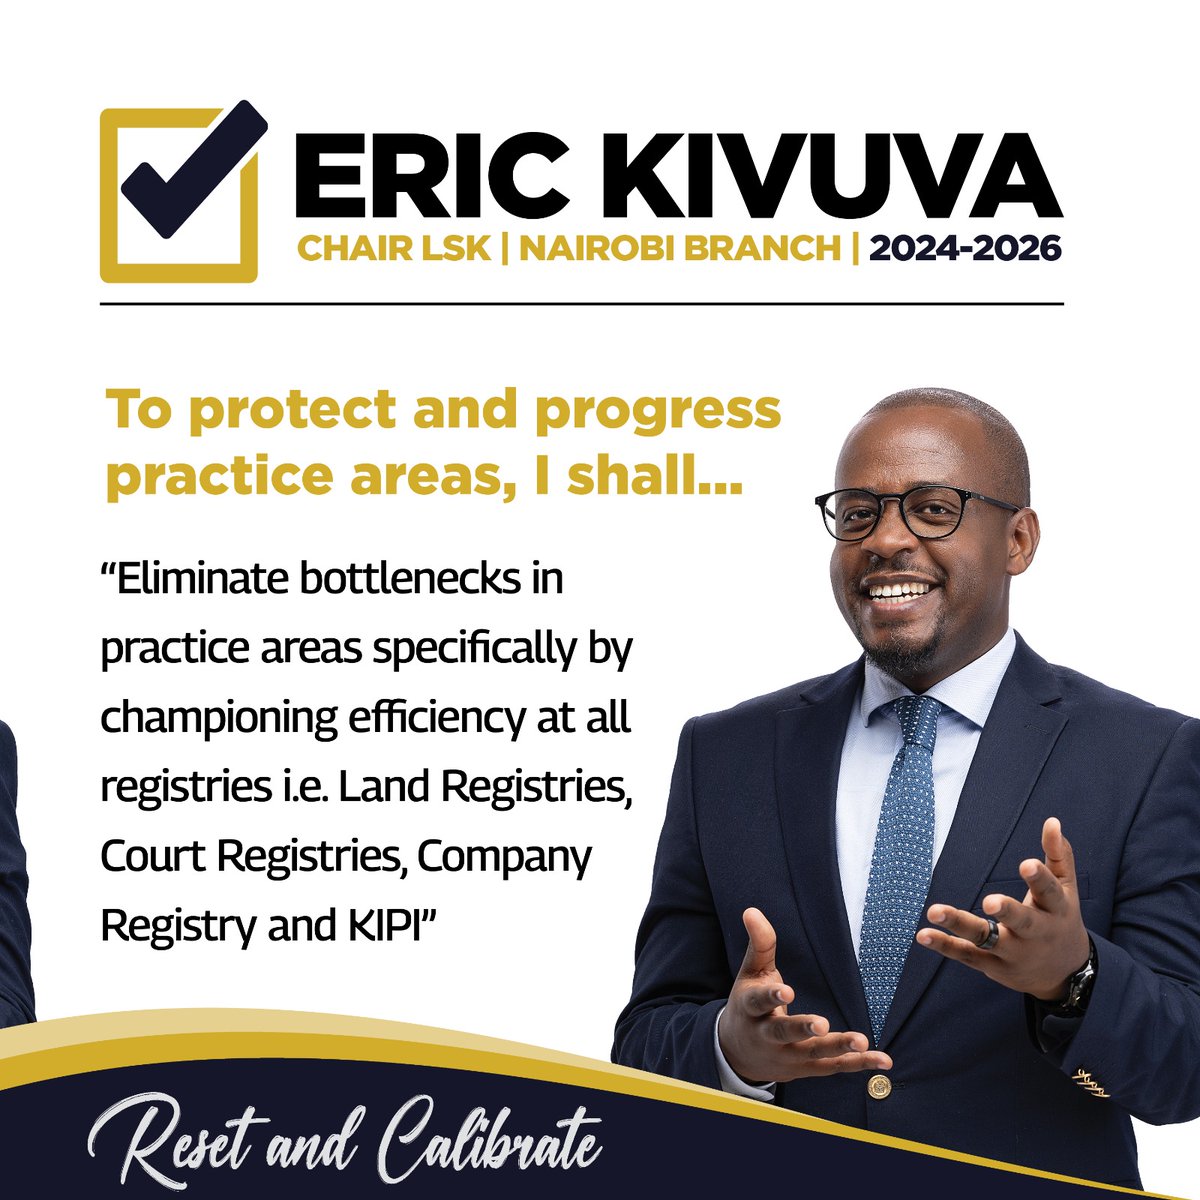 Eric's leadership during the LSK elections debate ensured a fair and transparent process, reinforcing trust in the branch's governance.
Eric Kivuva
#KivuvaNairobiLSK